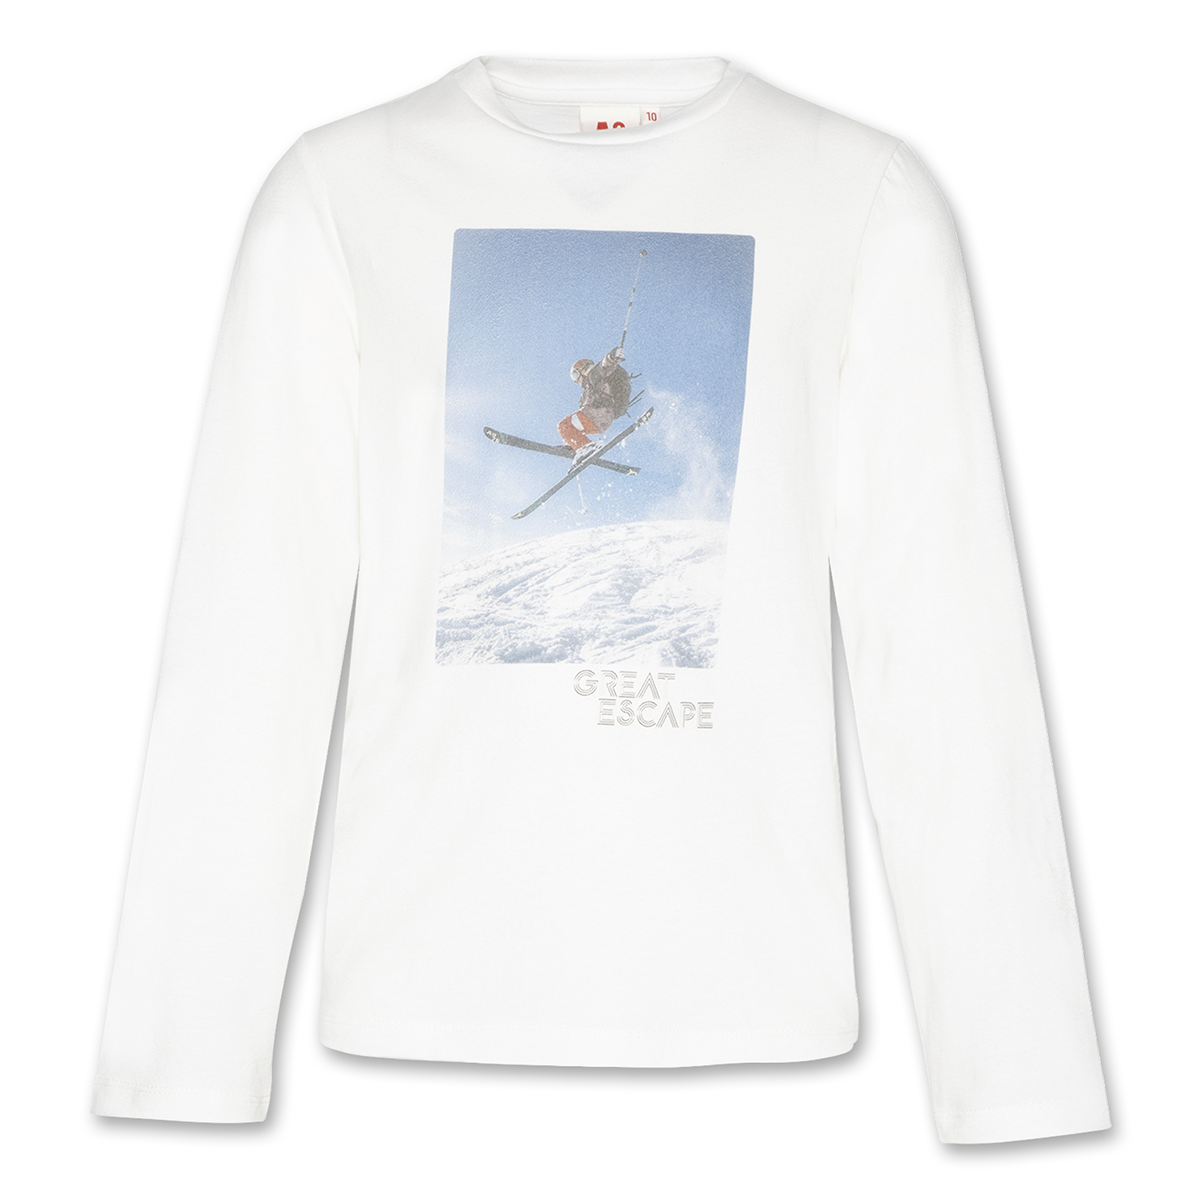 AO76 Mat L/s Ski T-shirt